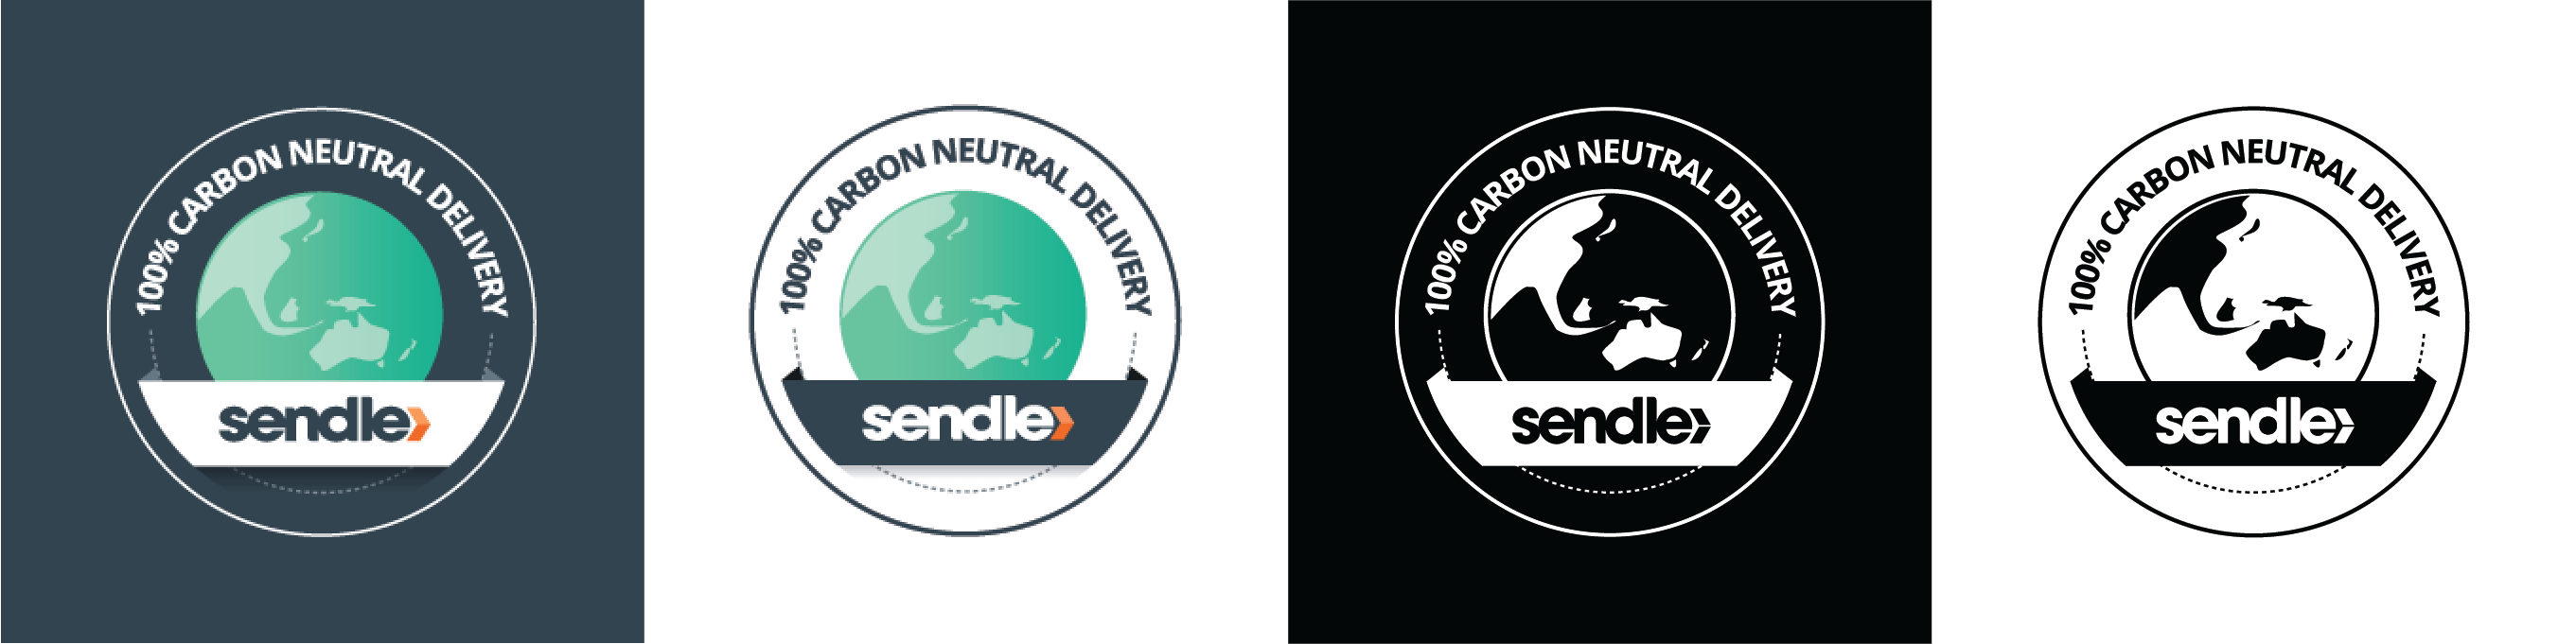 sendle-carbon-neutral-logo-stickers_2x.png